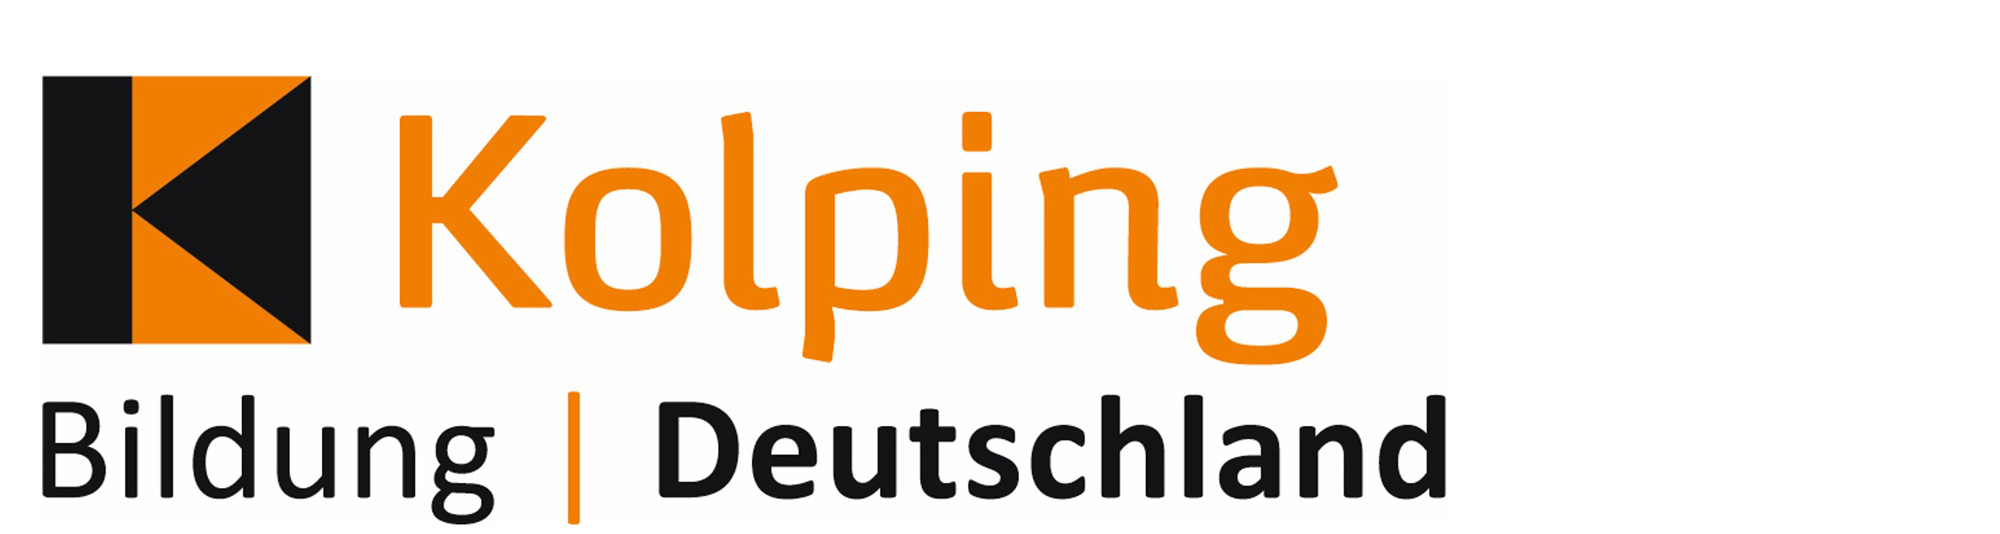 Kolping Bildung Deutschland gGmbH - Pflegeschule Bergkamen